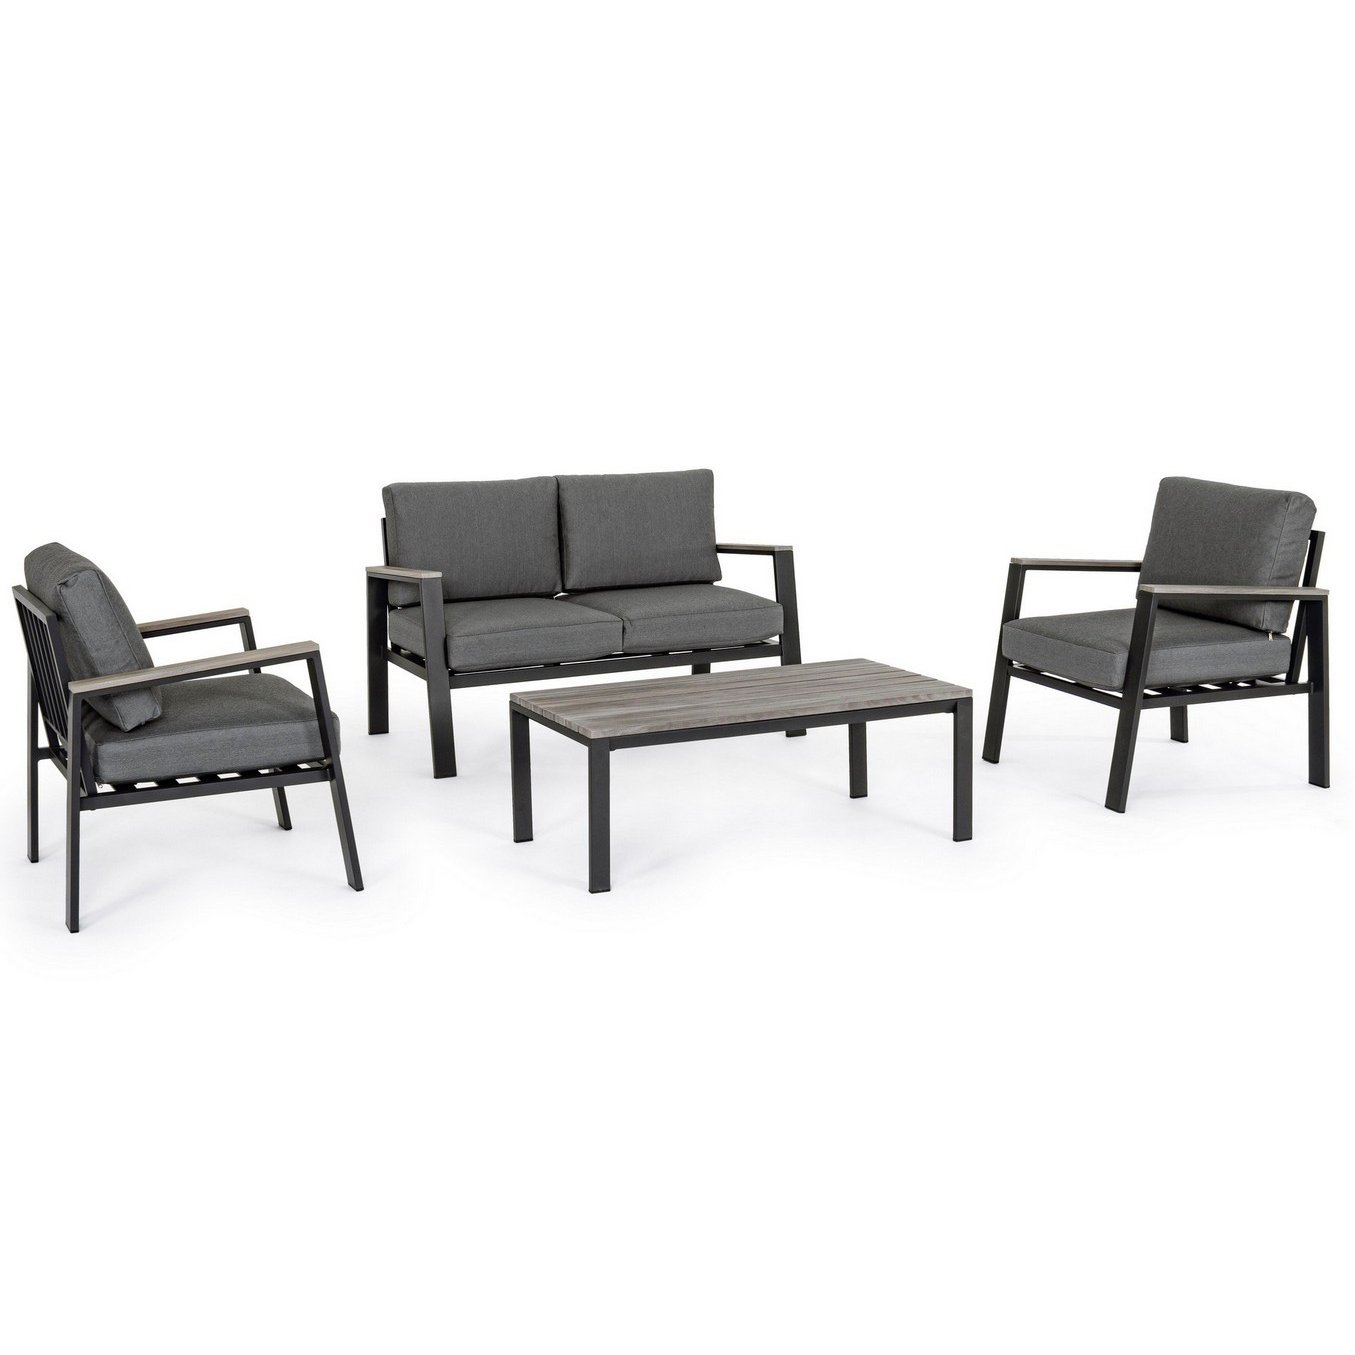 Комплект мебели Bizzotto Belmar 4 предмета, цвет серый, размер 132х75х84 см